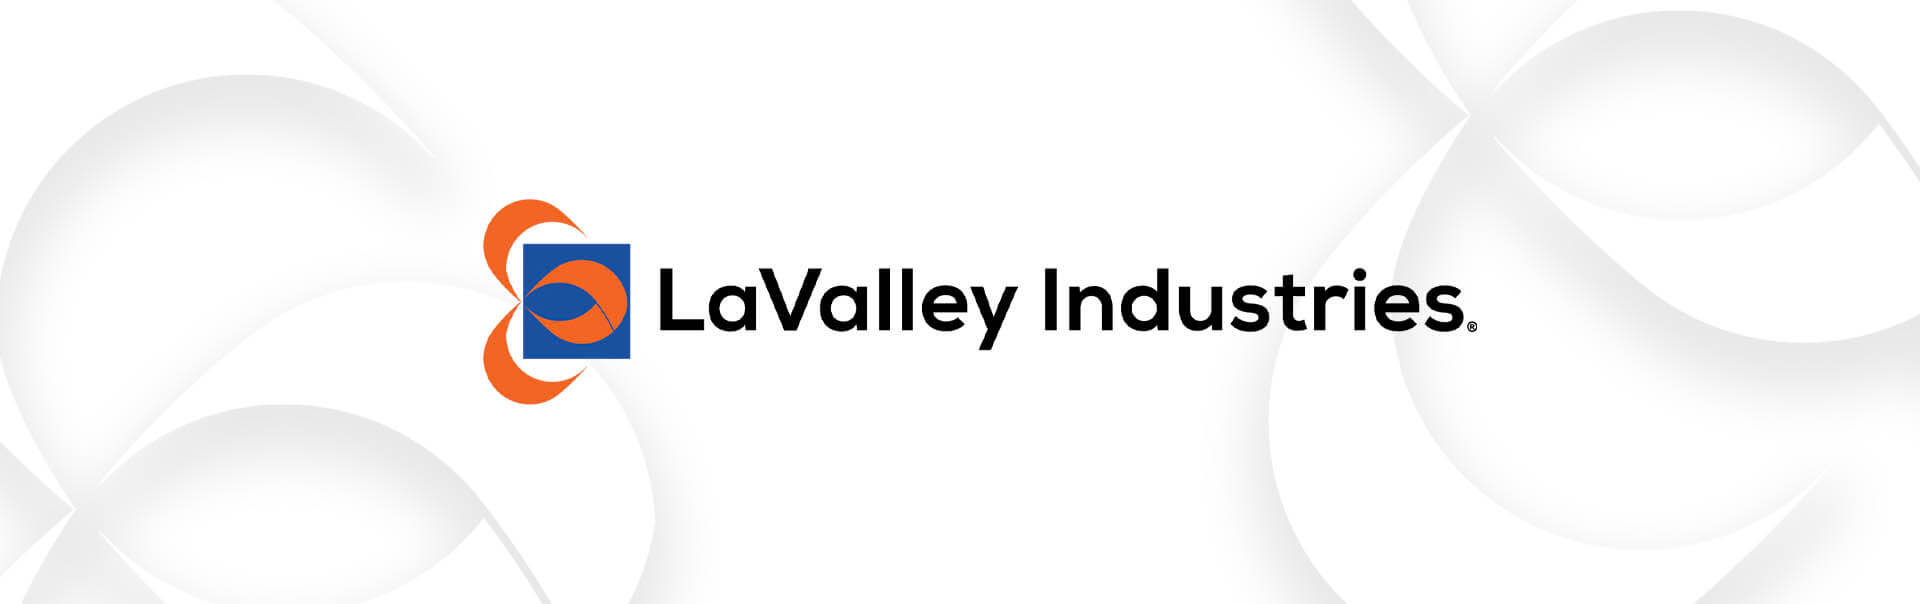 LaValley Industries Pipeline material handling